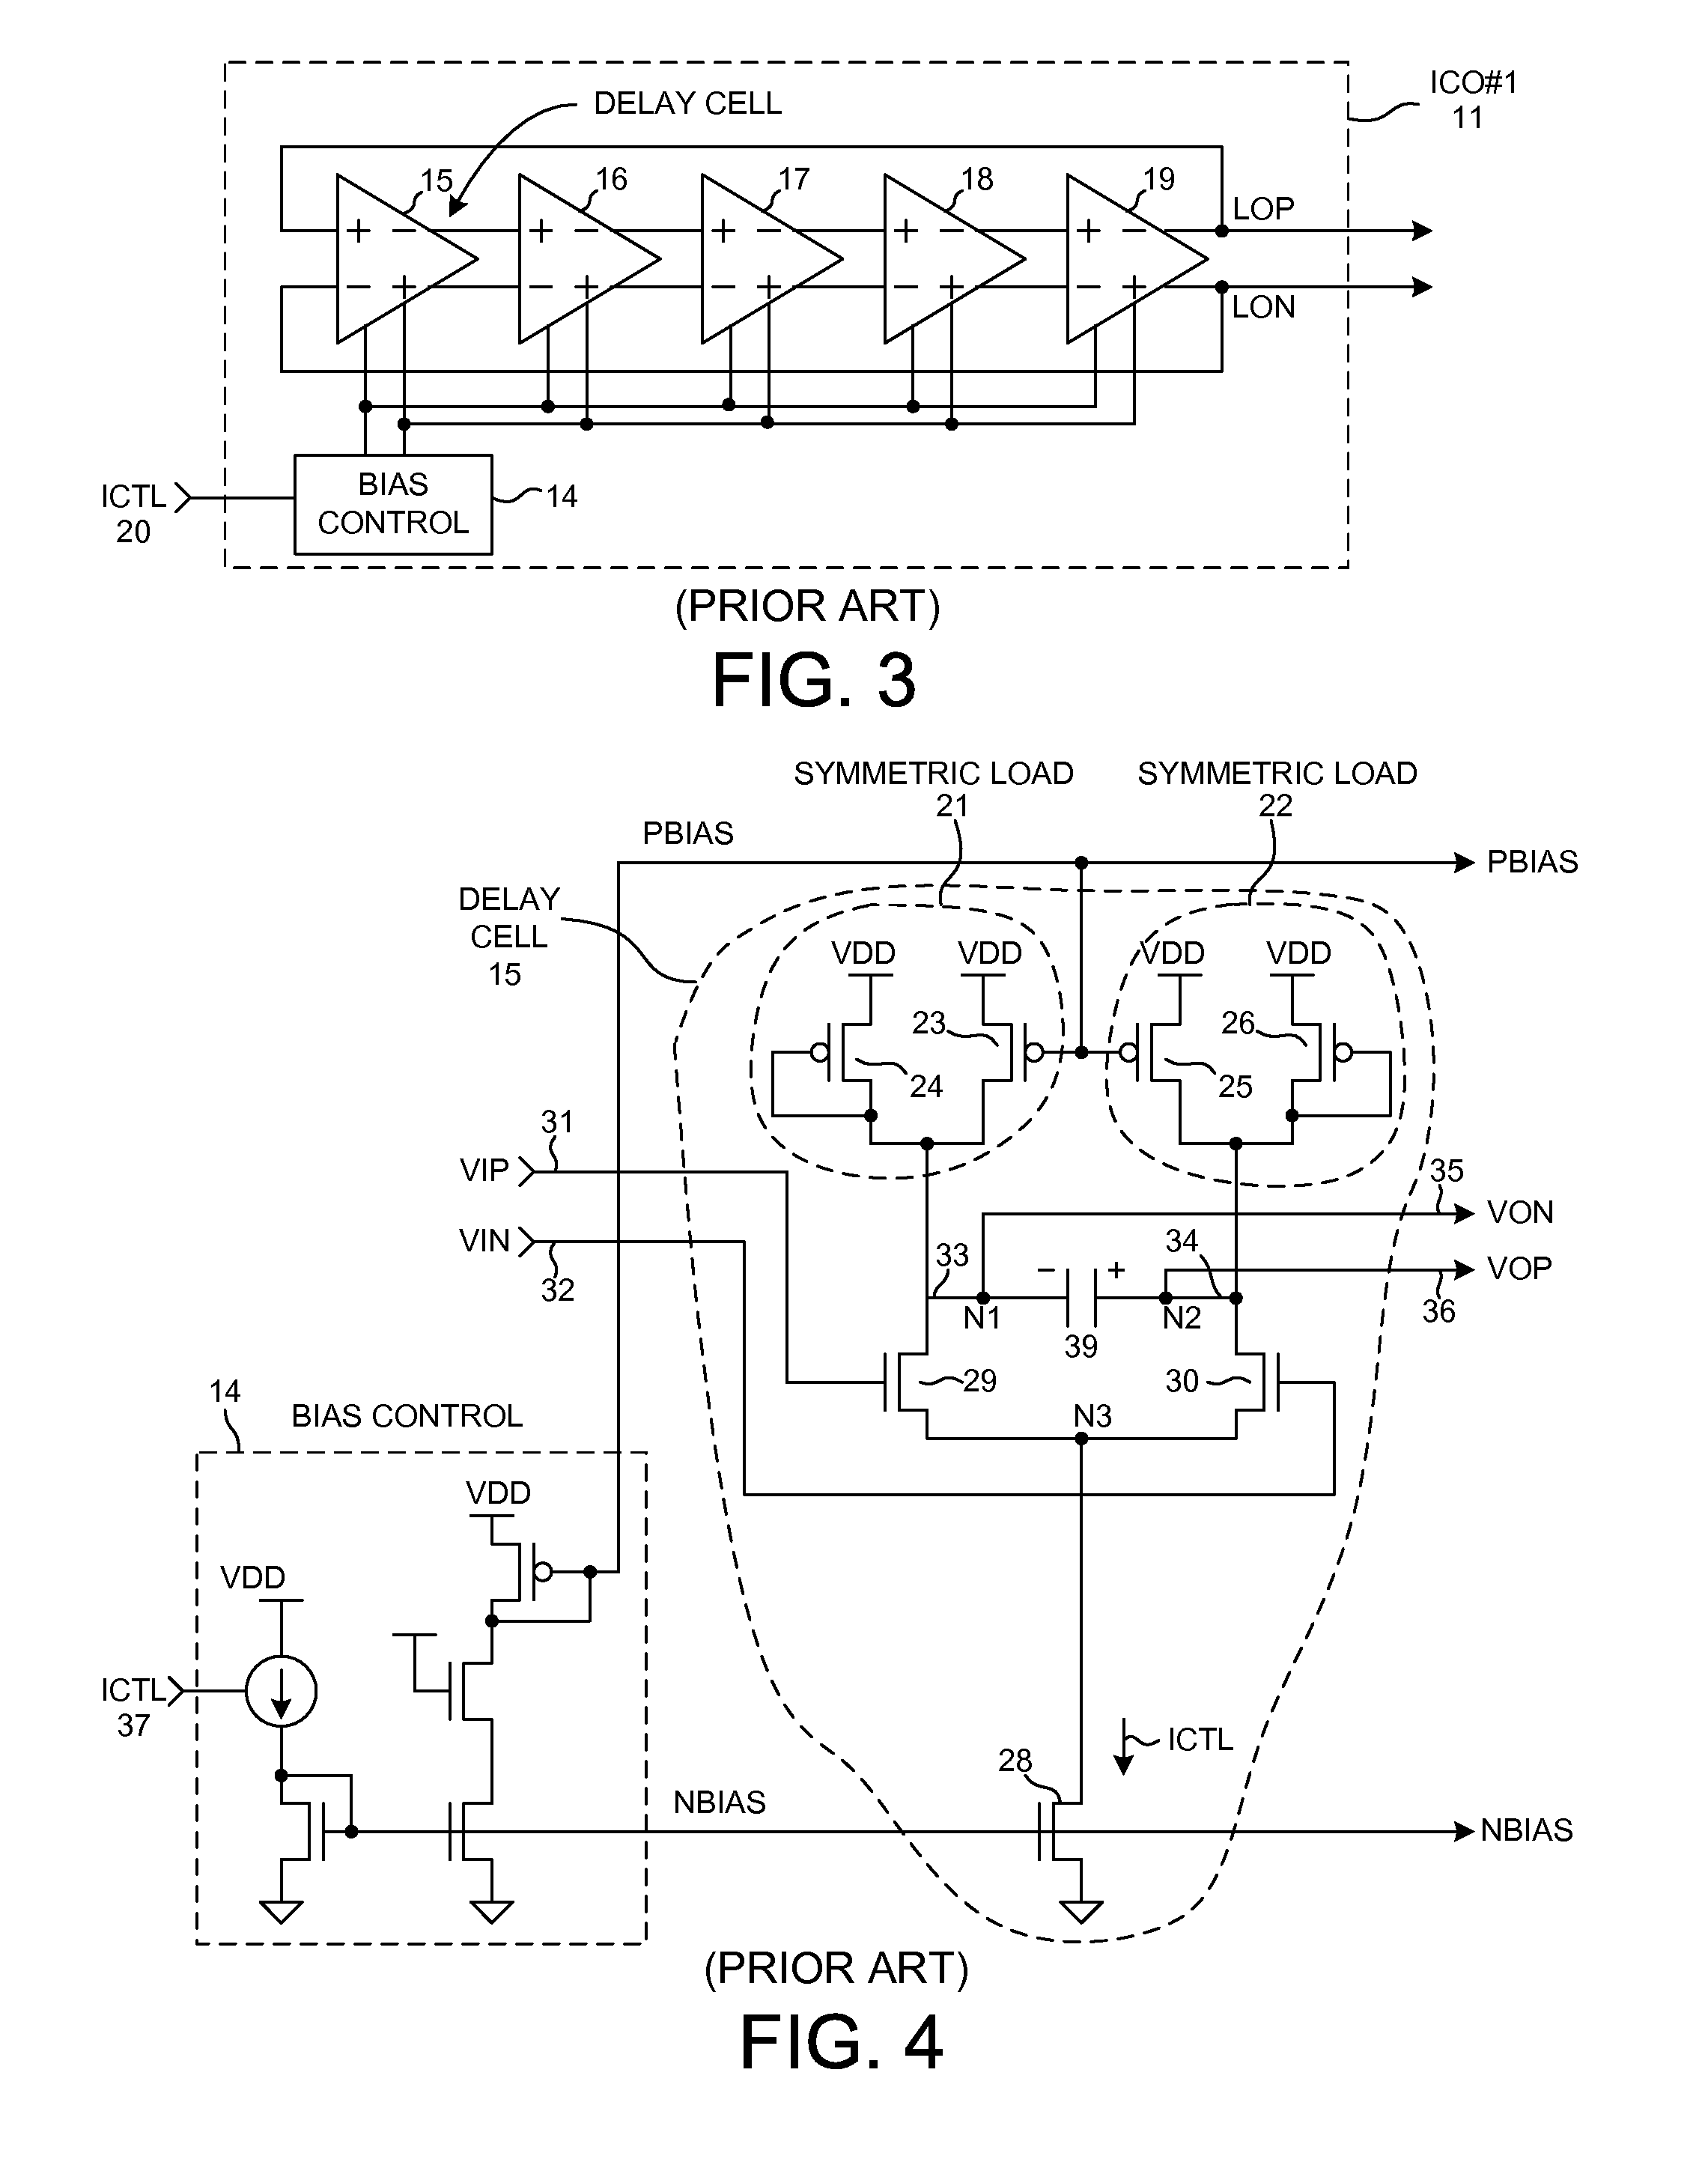 Symmetric load delay cell oscillator